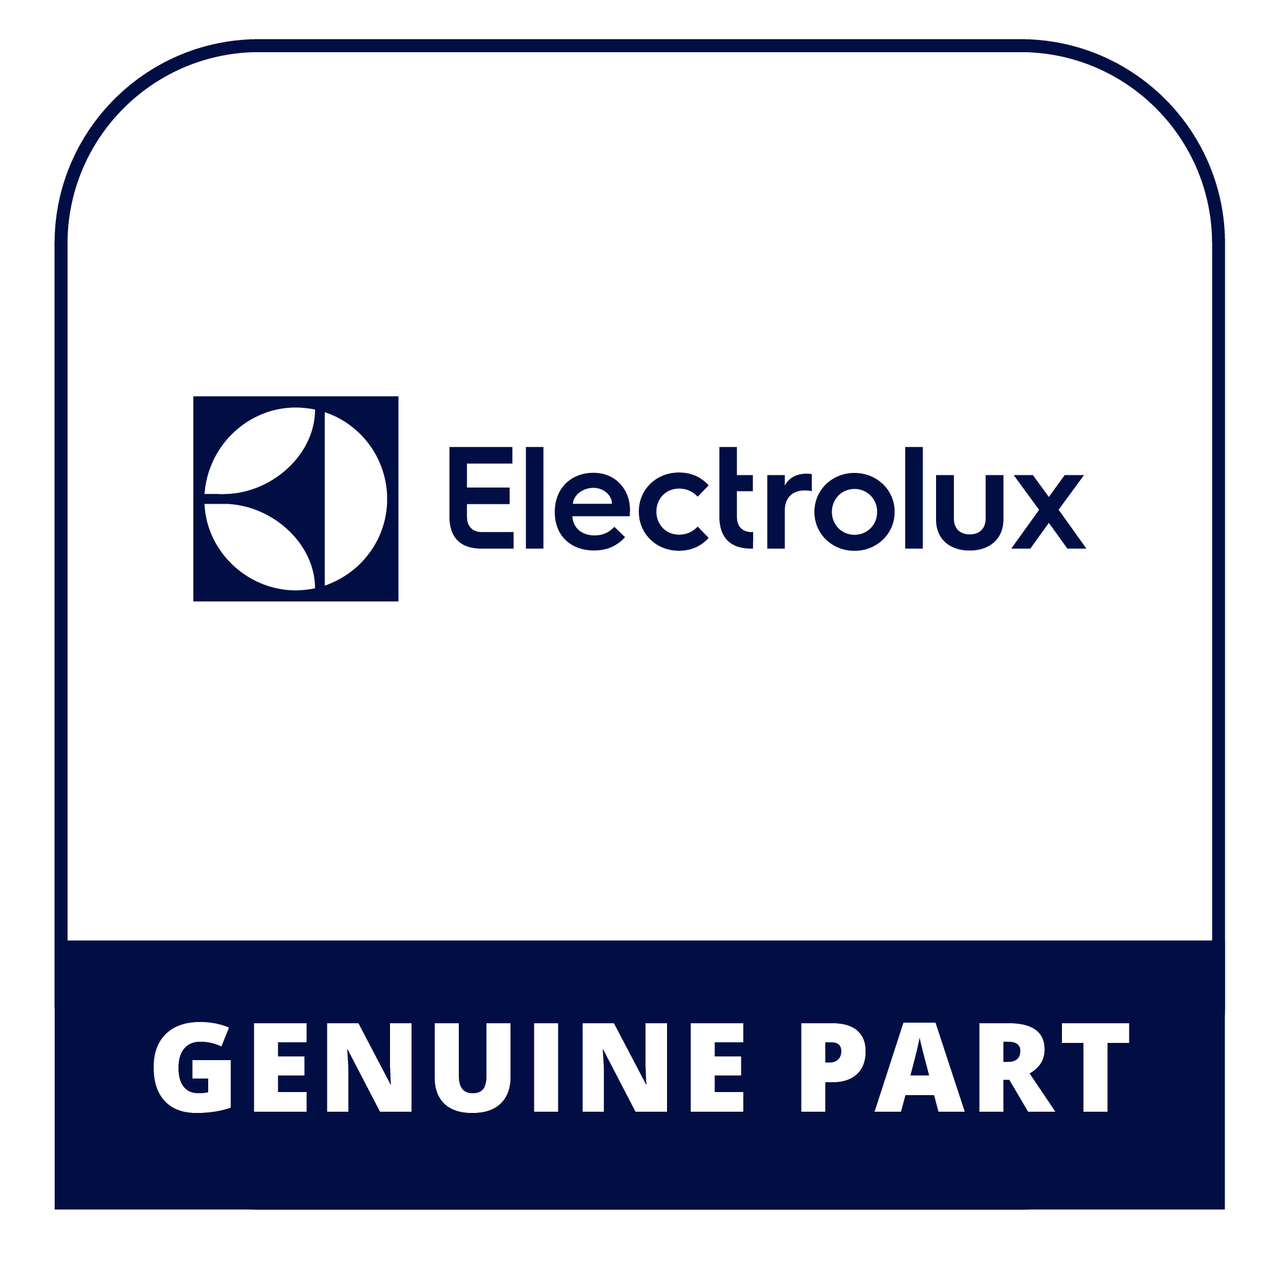 Frigidaire - Electrolux 5304496125 Shield - Genuine Electrolux Part